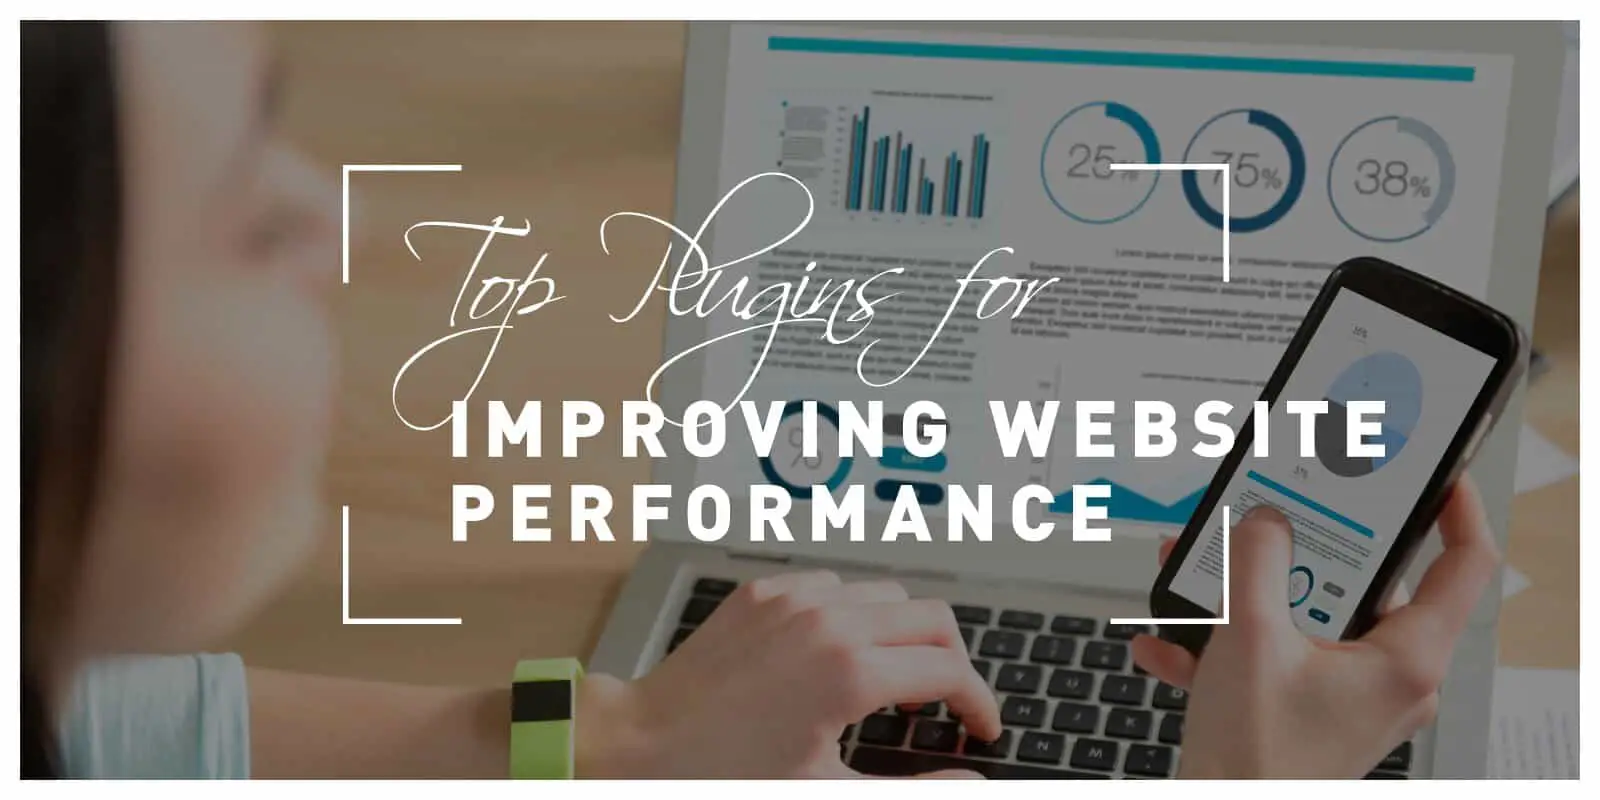 Top Plugins for Improving Website Performance